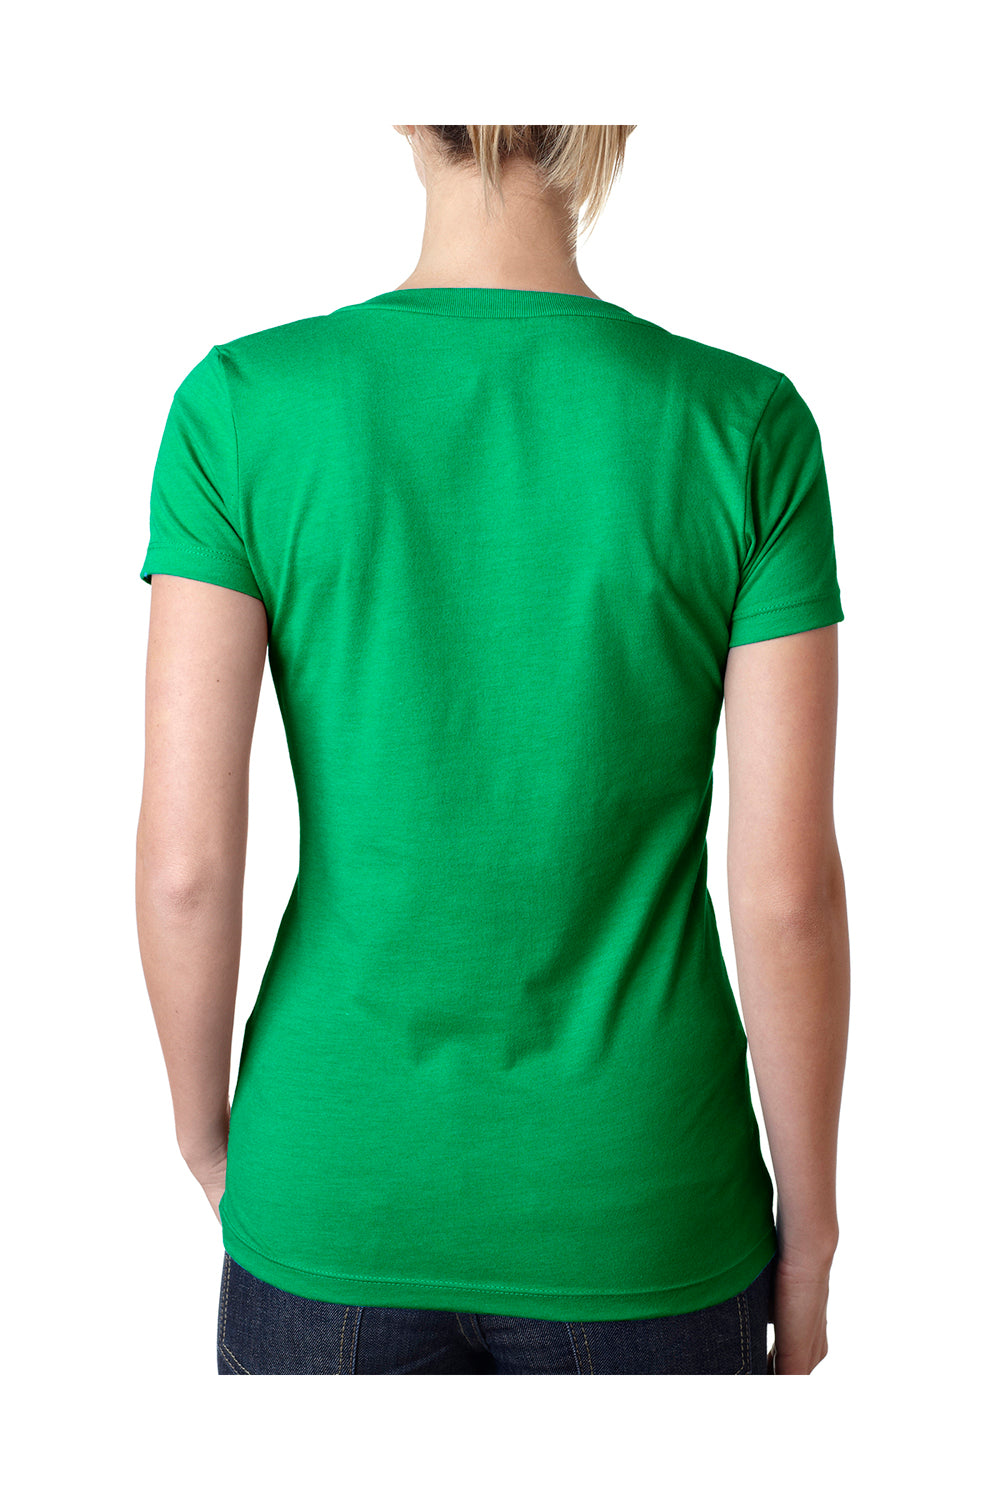 Next Level 6640 Womens CVC Jersey Short Sleeve V-Neck T-Shirt Kelly Green Back